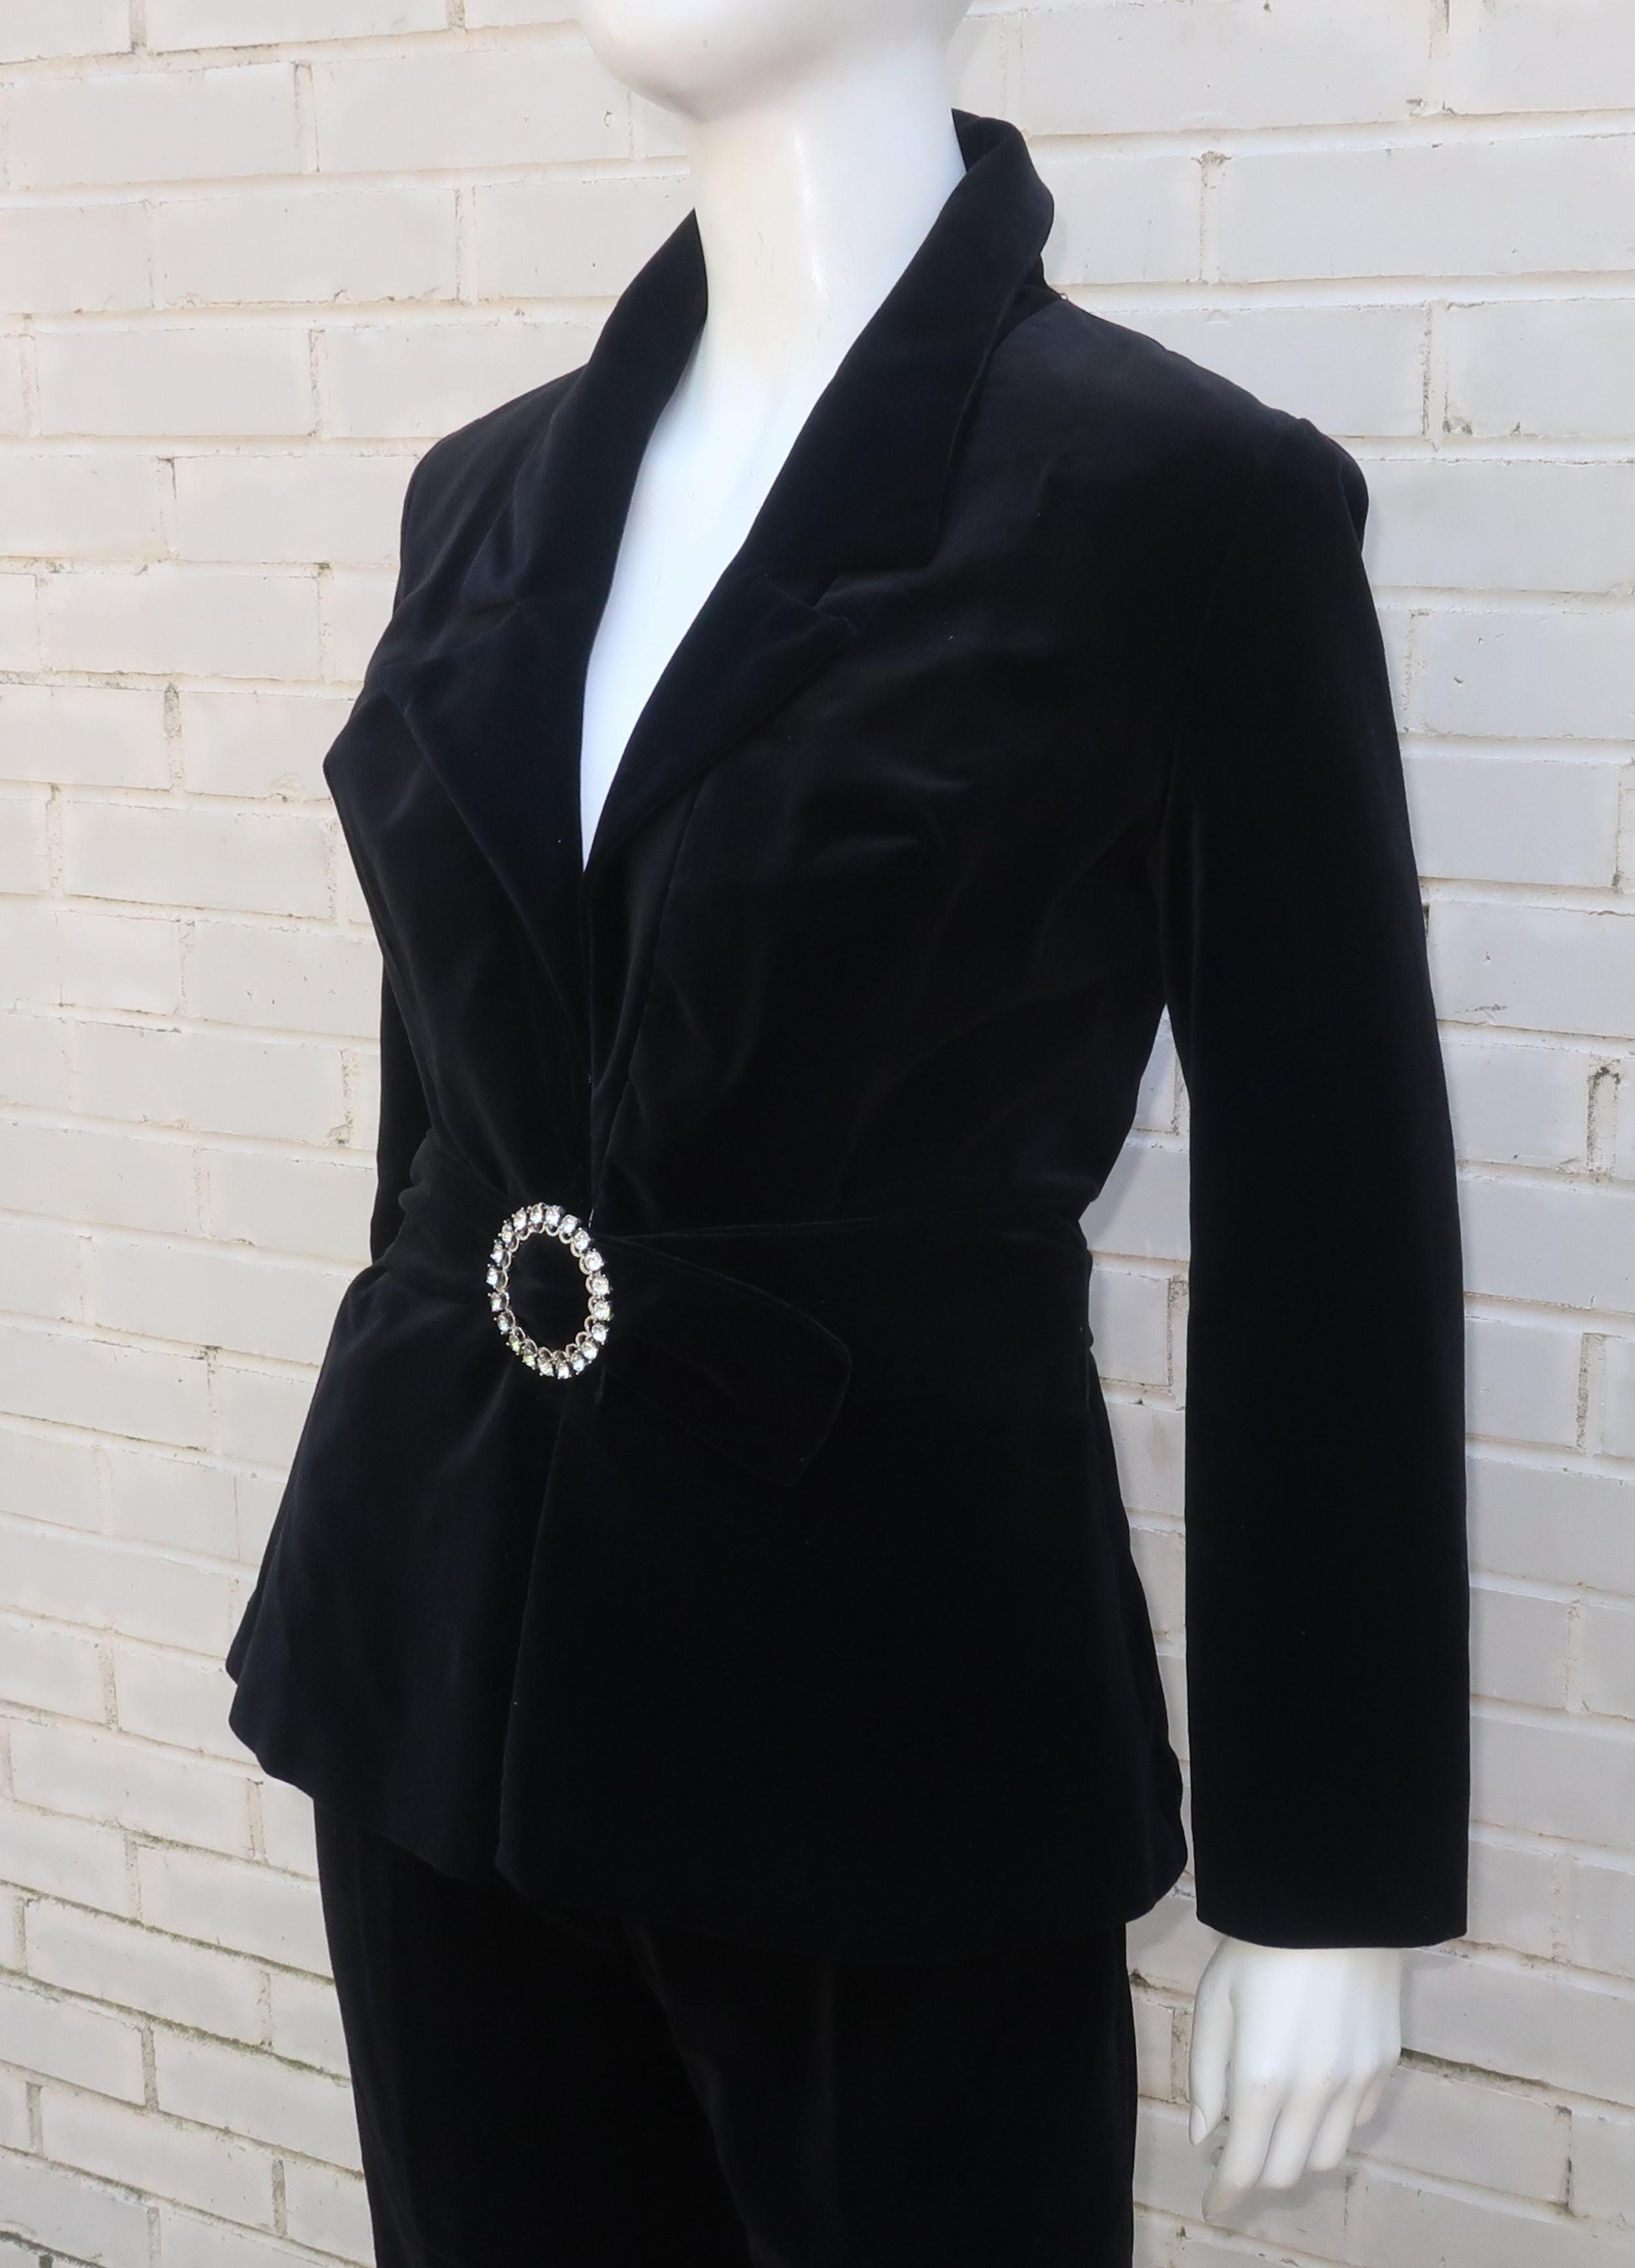 Black Velvet Pant Suit With Rhinestone Belt, C.1970 For Sale 2